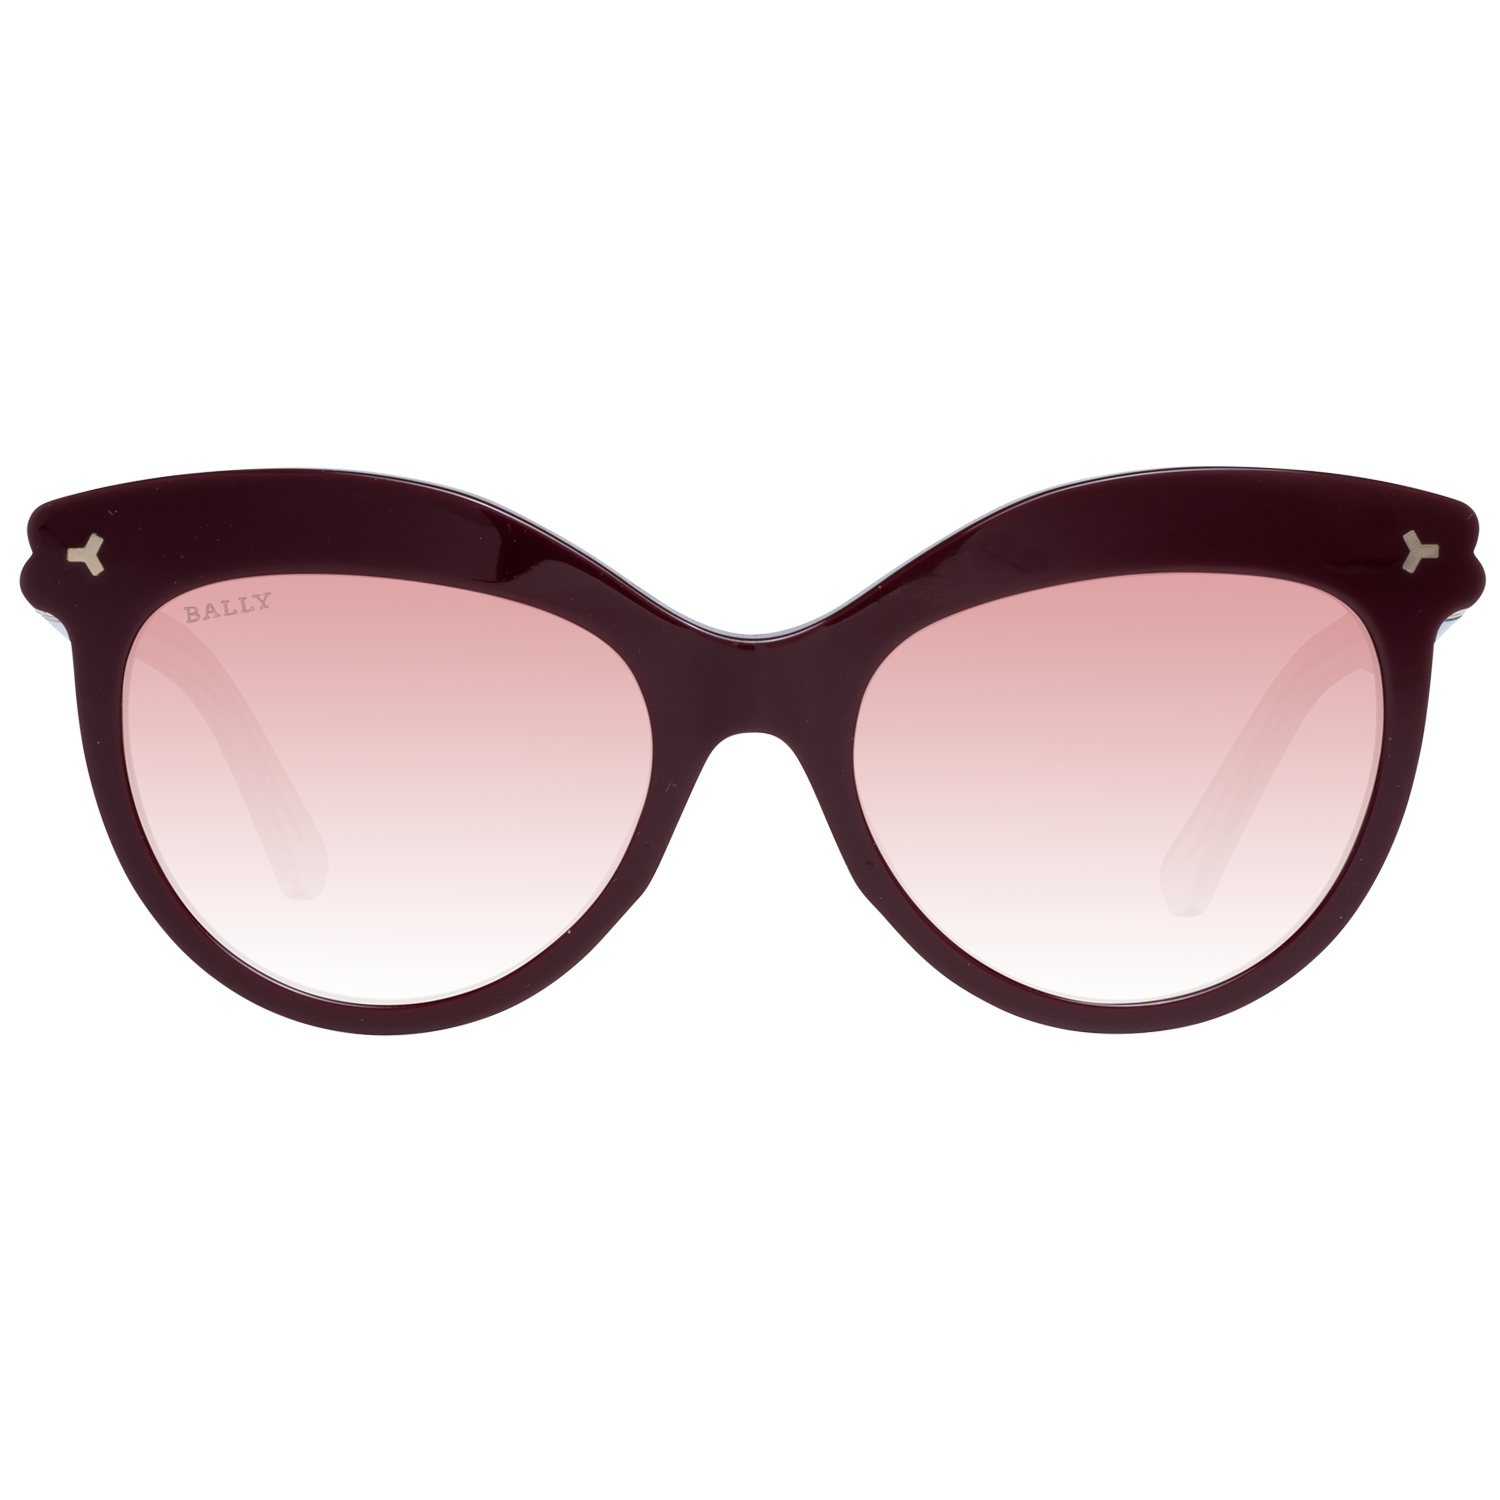 Bally Sunglasses Bally Sunglasses BY0054 69T 55 Eyeglasses Eyewear UK USA Australia 